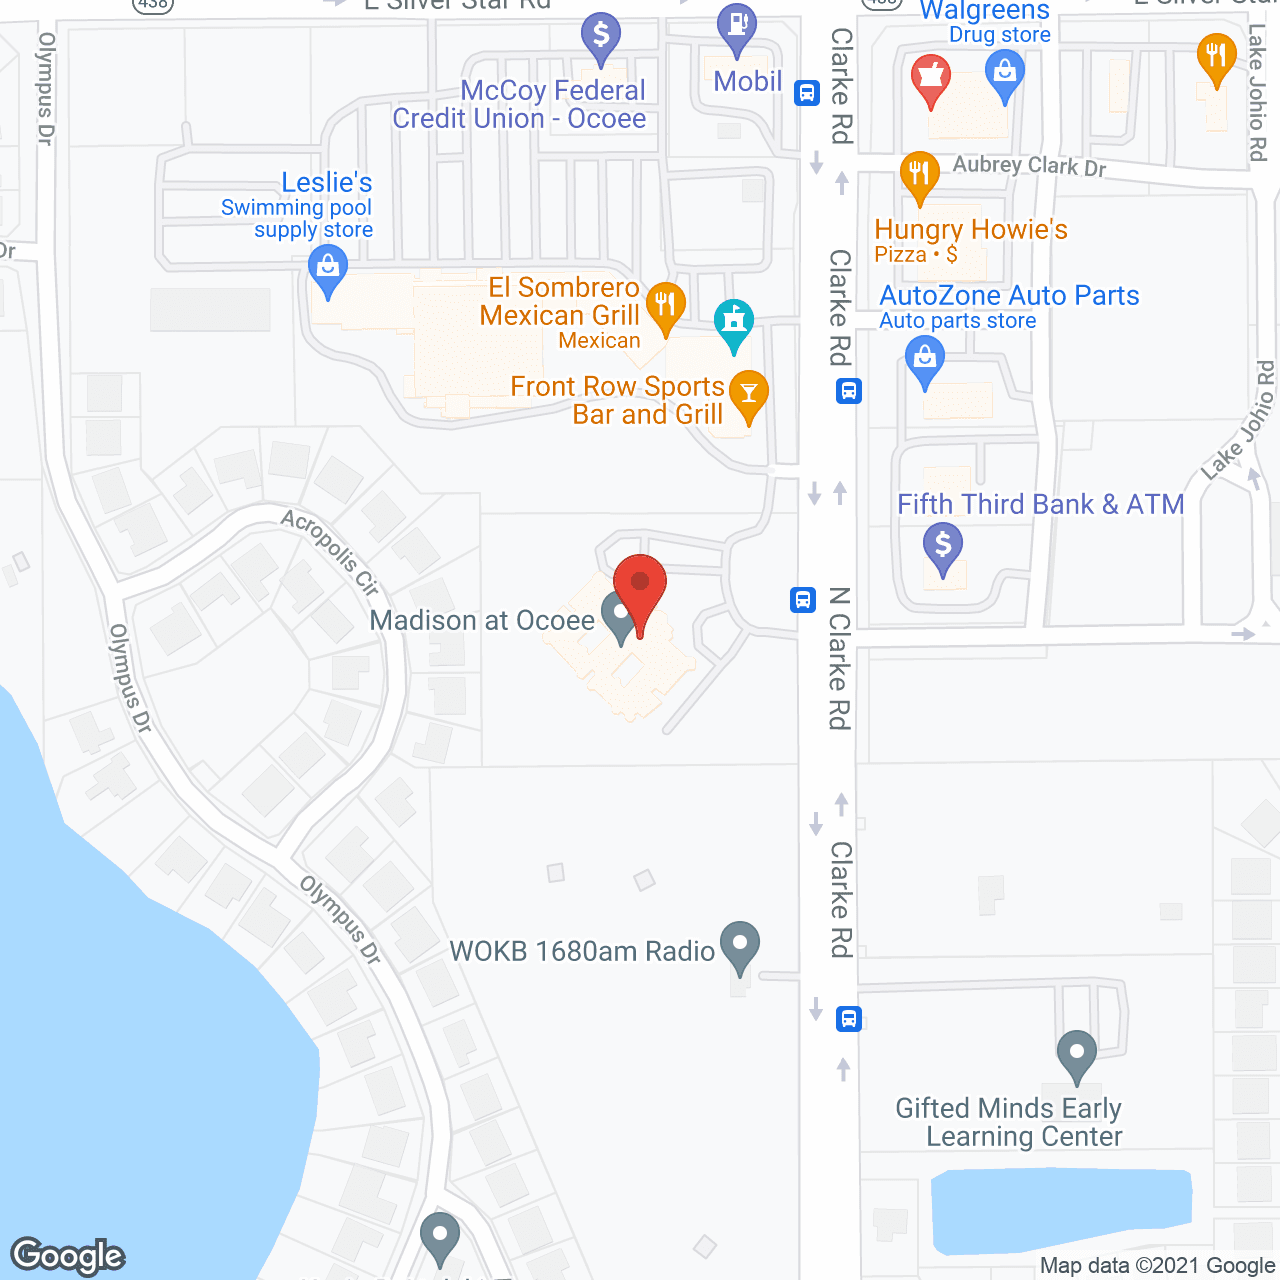 Madison at Ocoee in google map